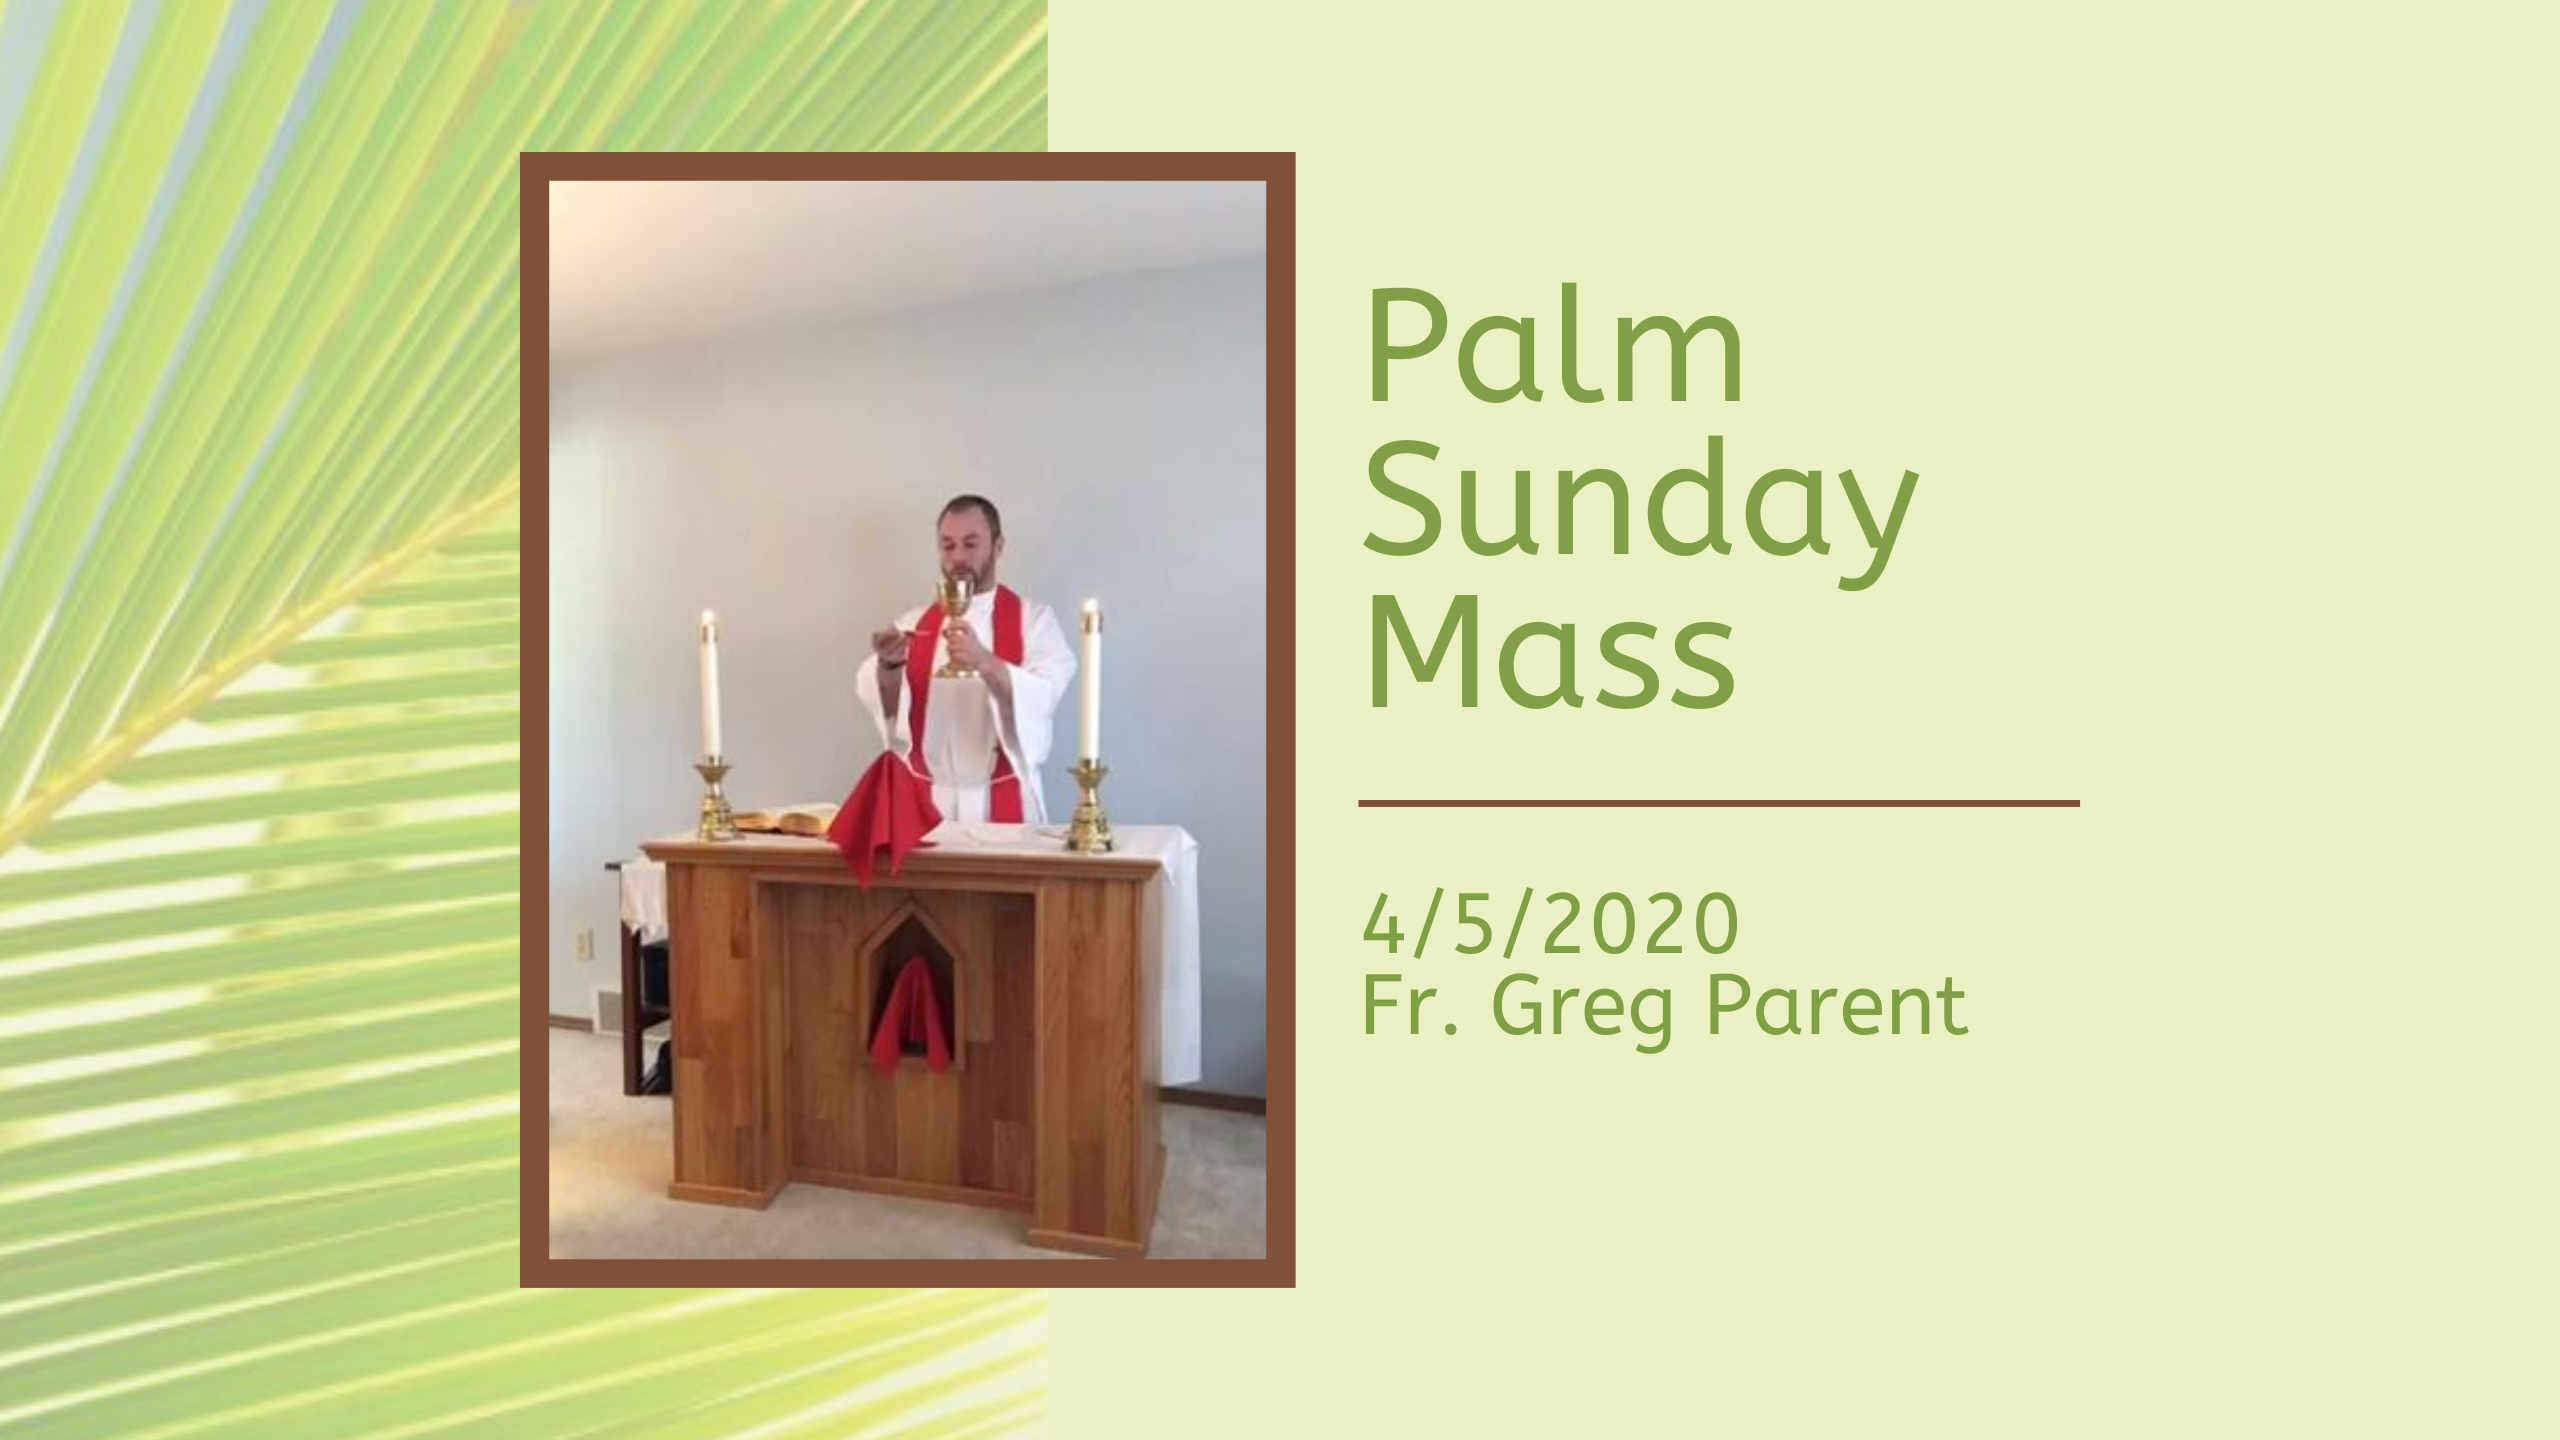 Palm Sunday Mass 4/5/2020 Fr. Greg Parent Quad Parishes of Green Bay